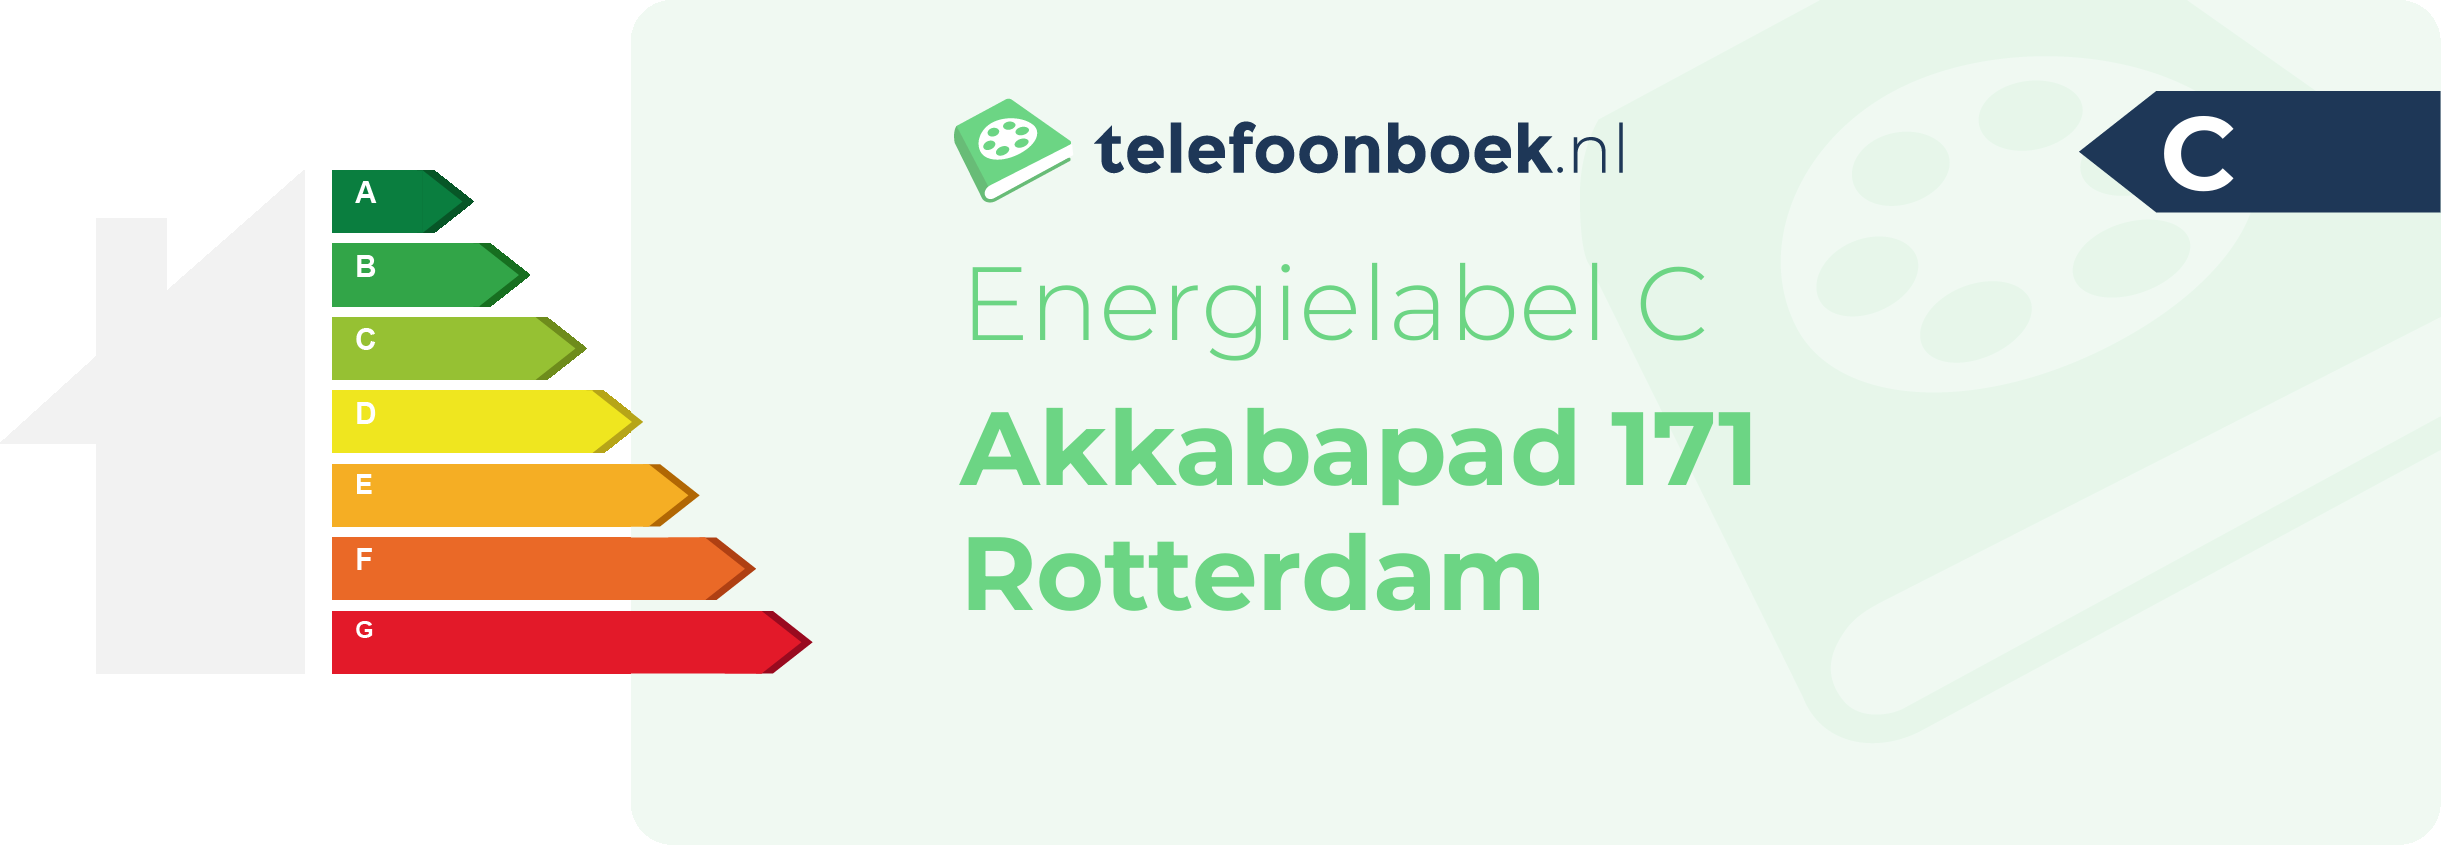 Energielabel Akkabapad 171 Rotterdam